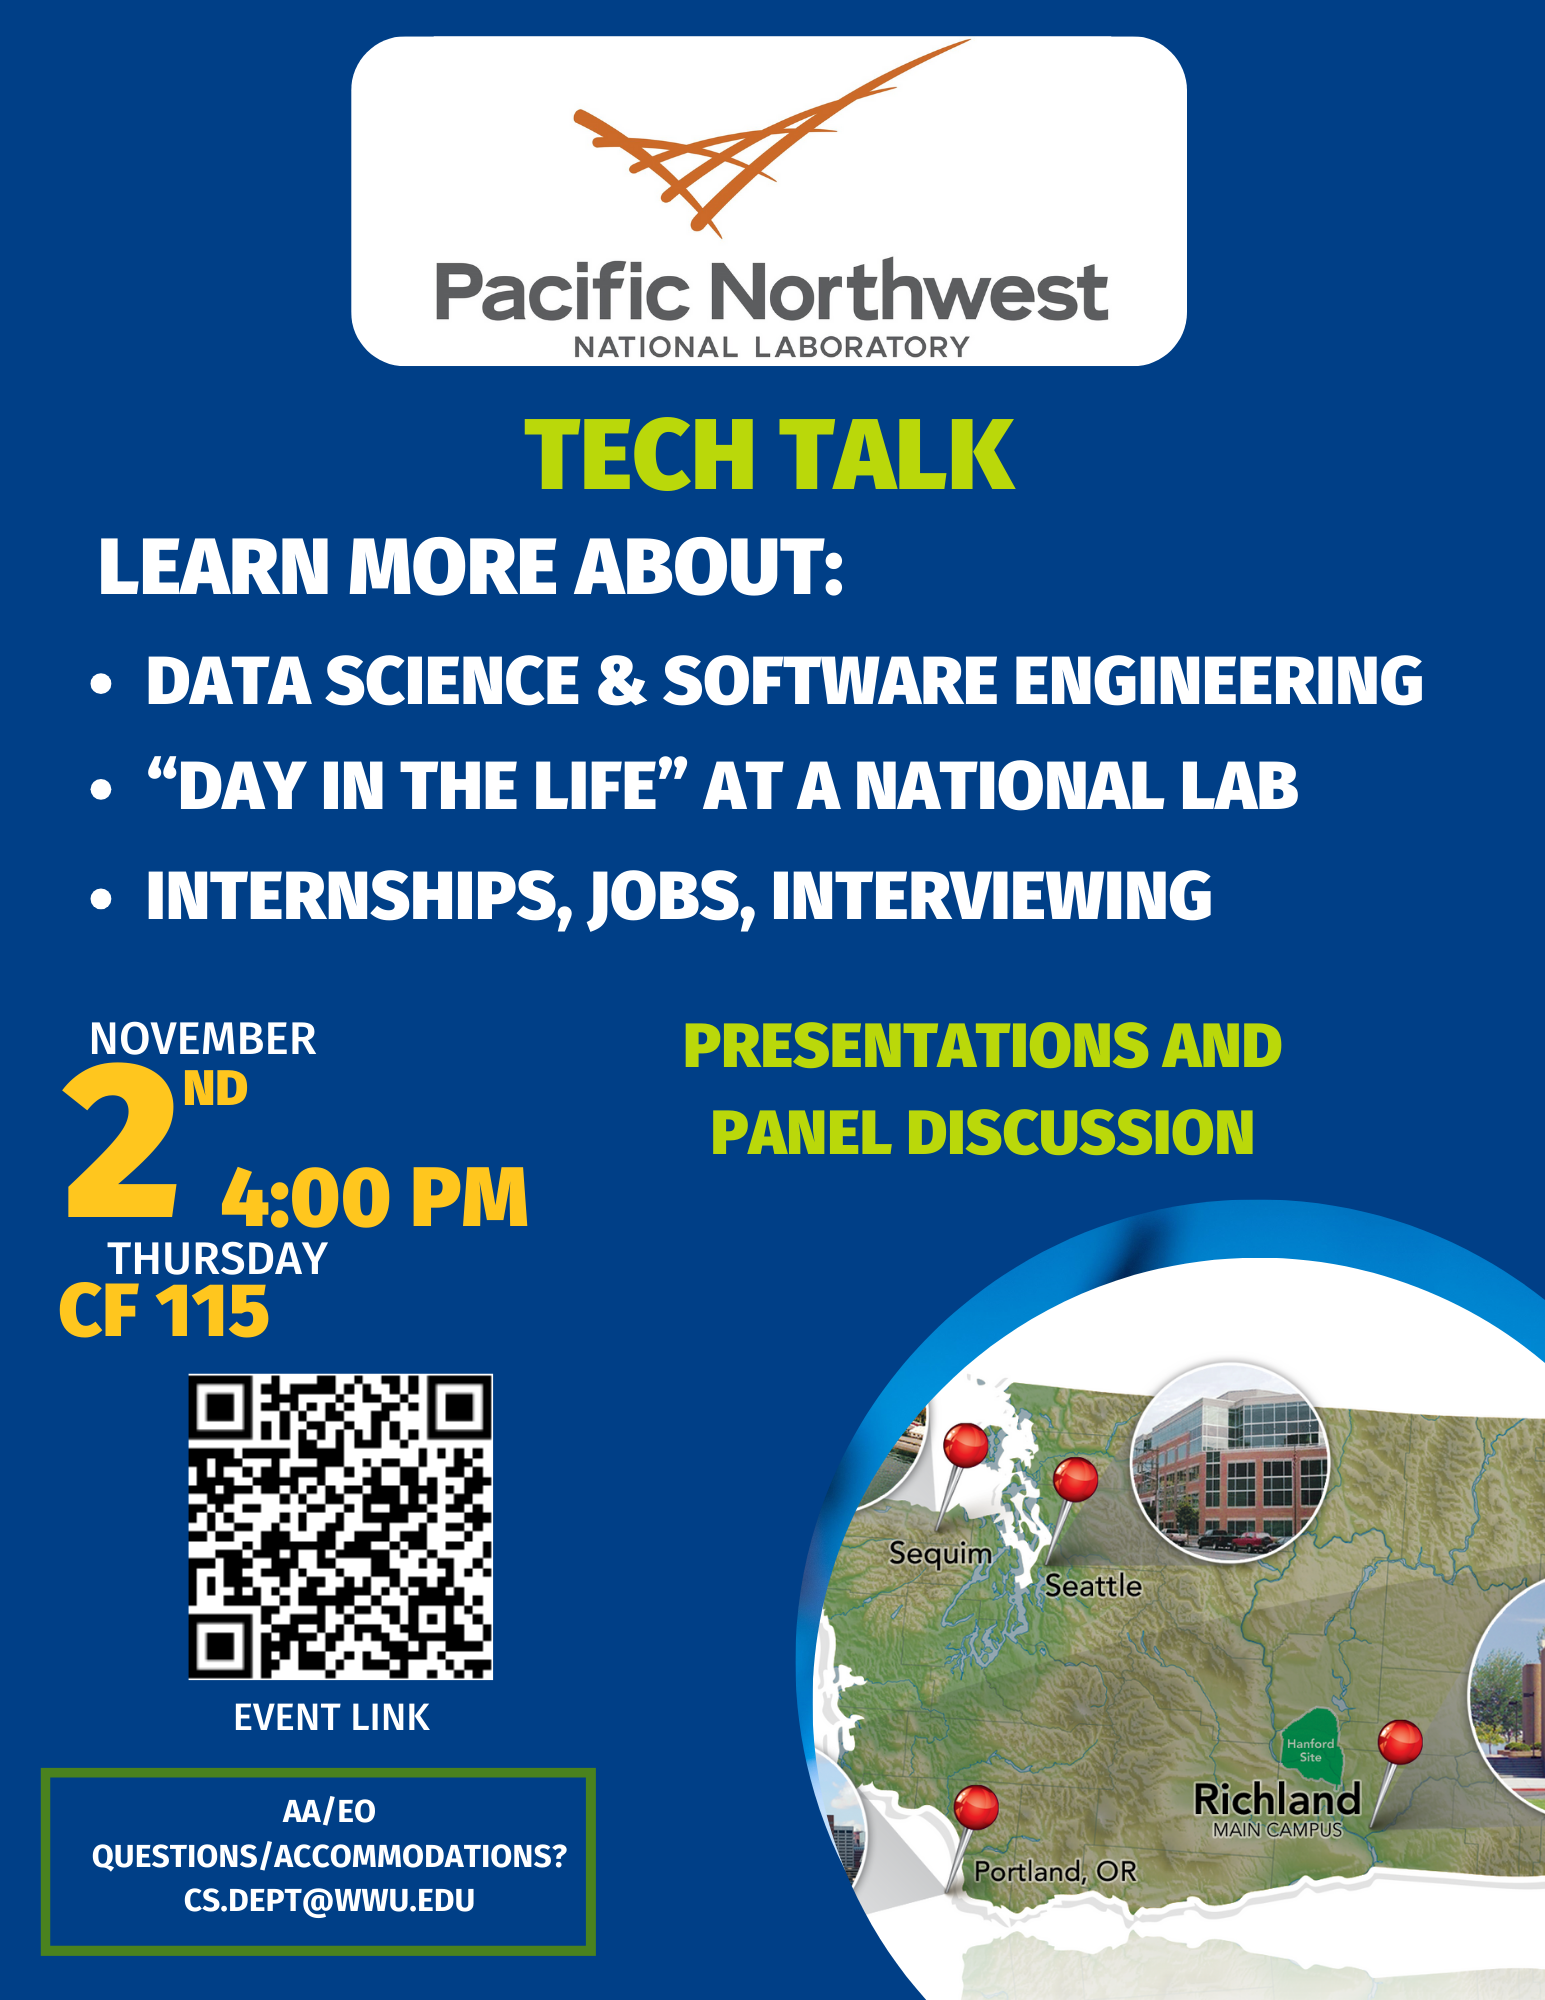 Pacific Northwest National Laboratory Tech Talk